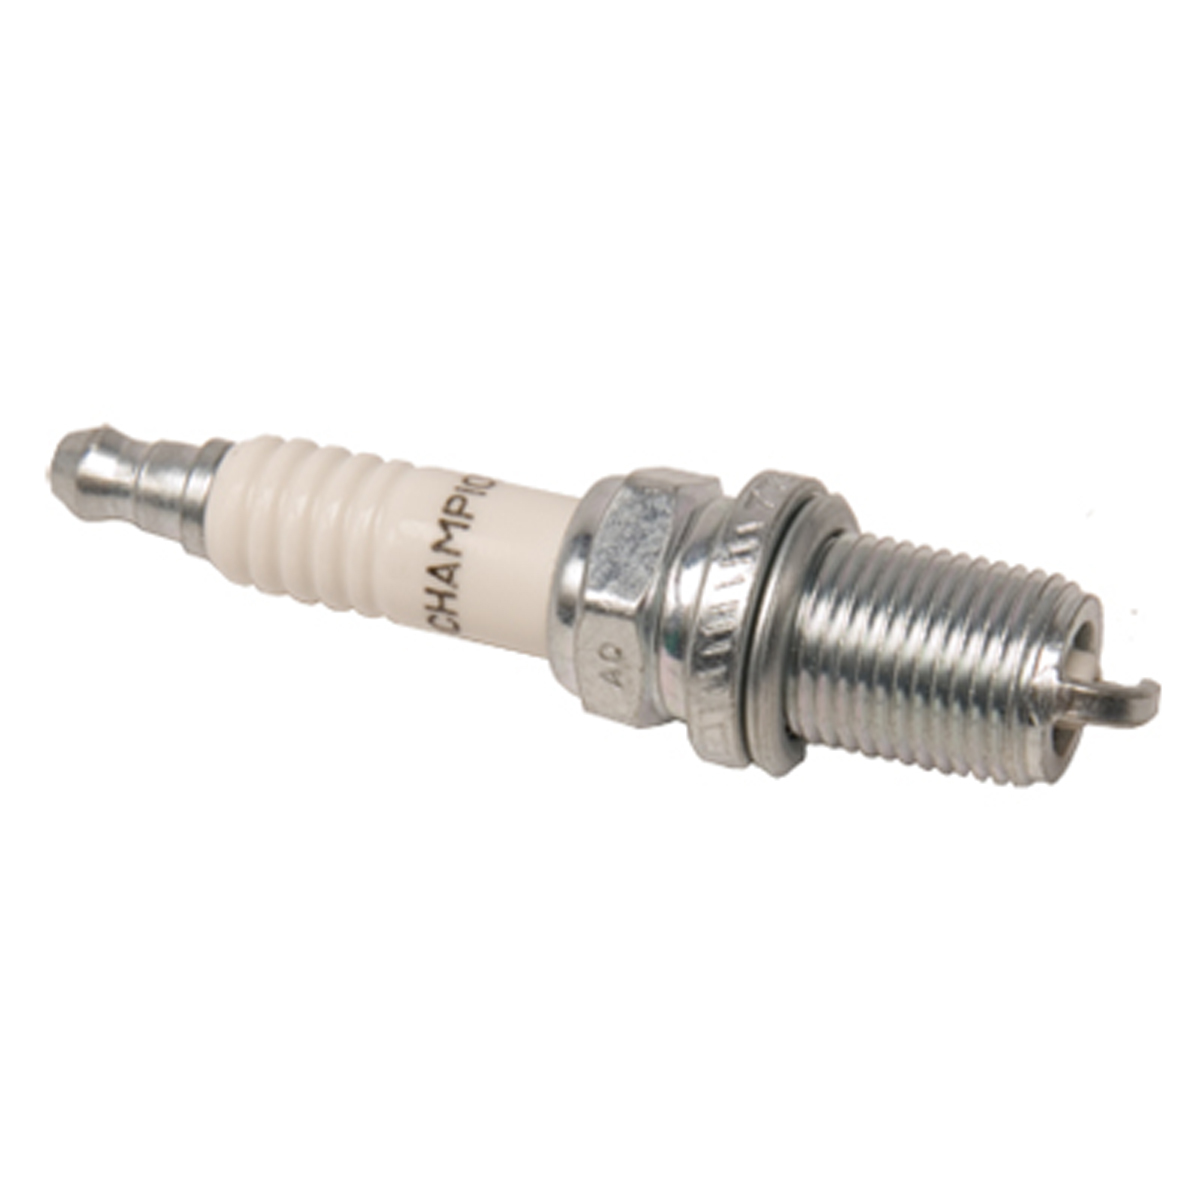 5pcs Spark Plug Replaces for JD M78543 Husq 531308128 RC12YC 2829 71-1 711 